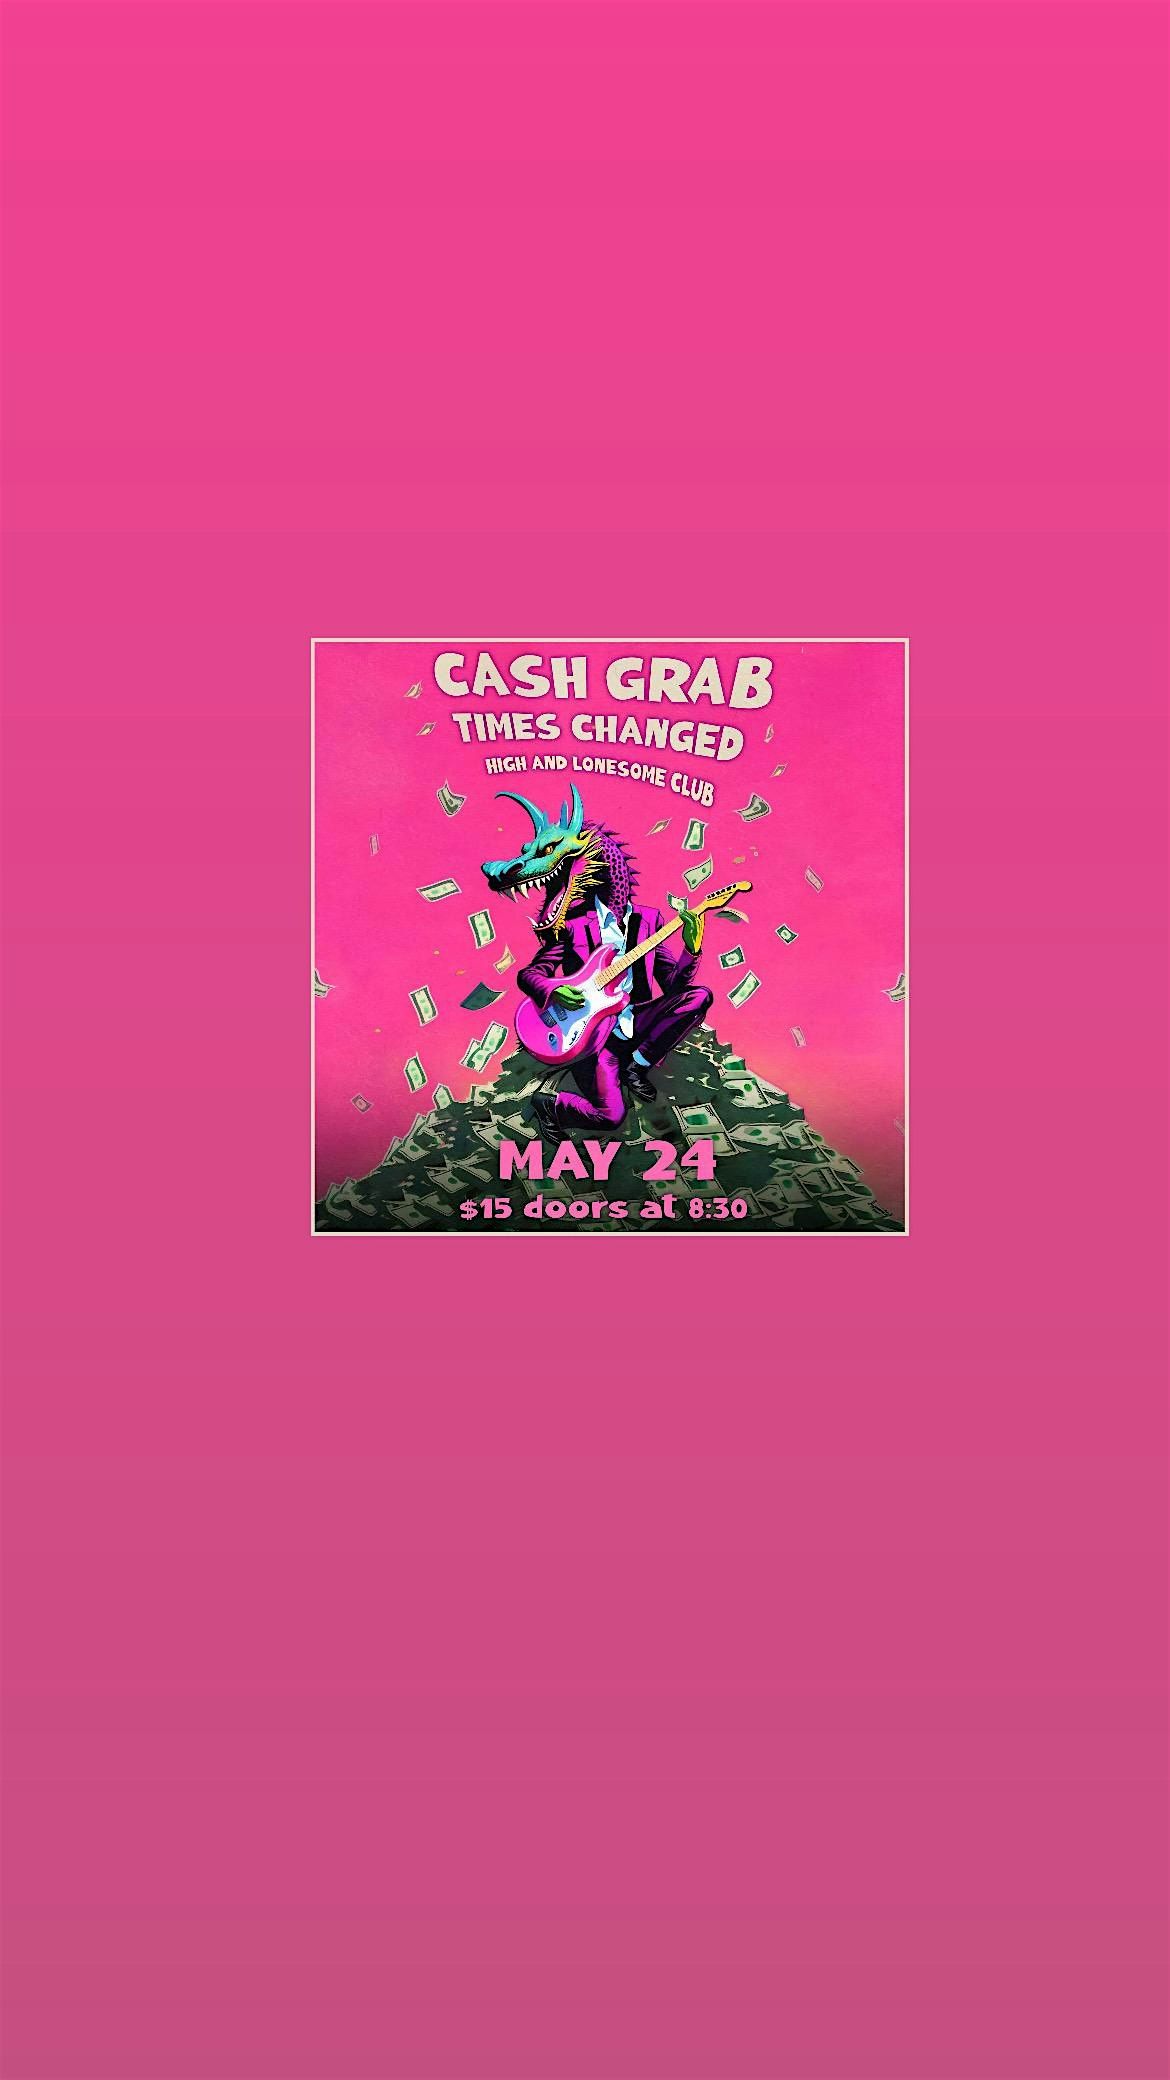 Cash Grab